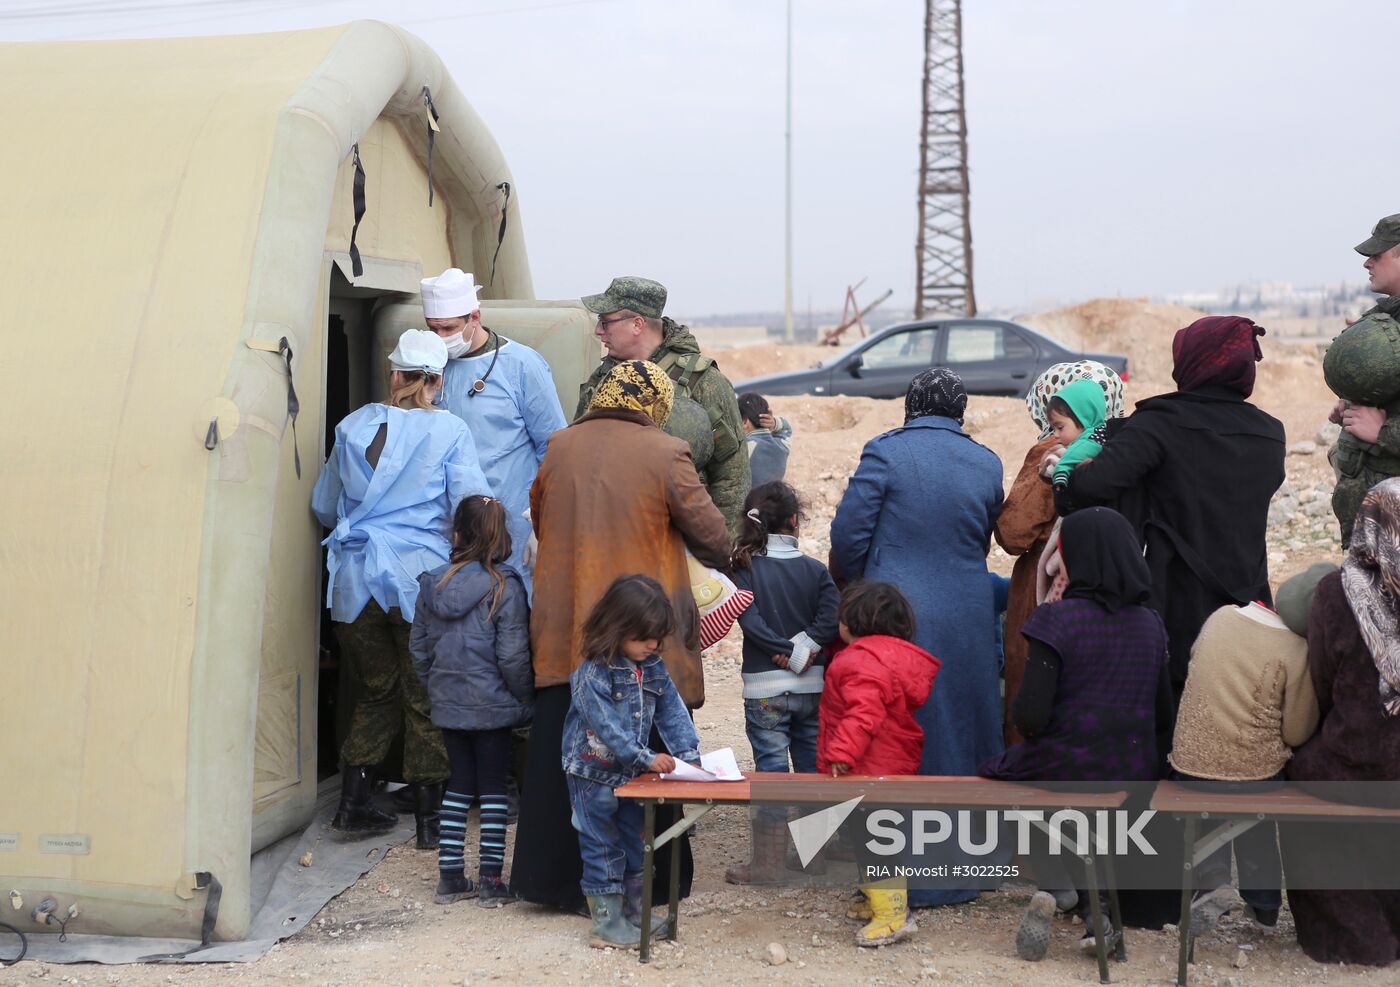 Jibrin temporary refugee accommodation center in Aleppo